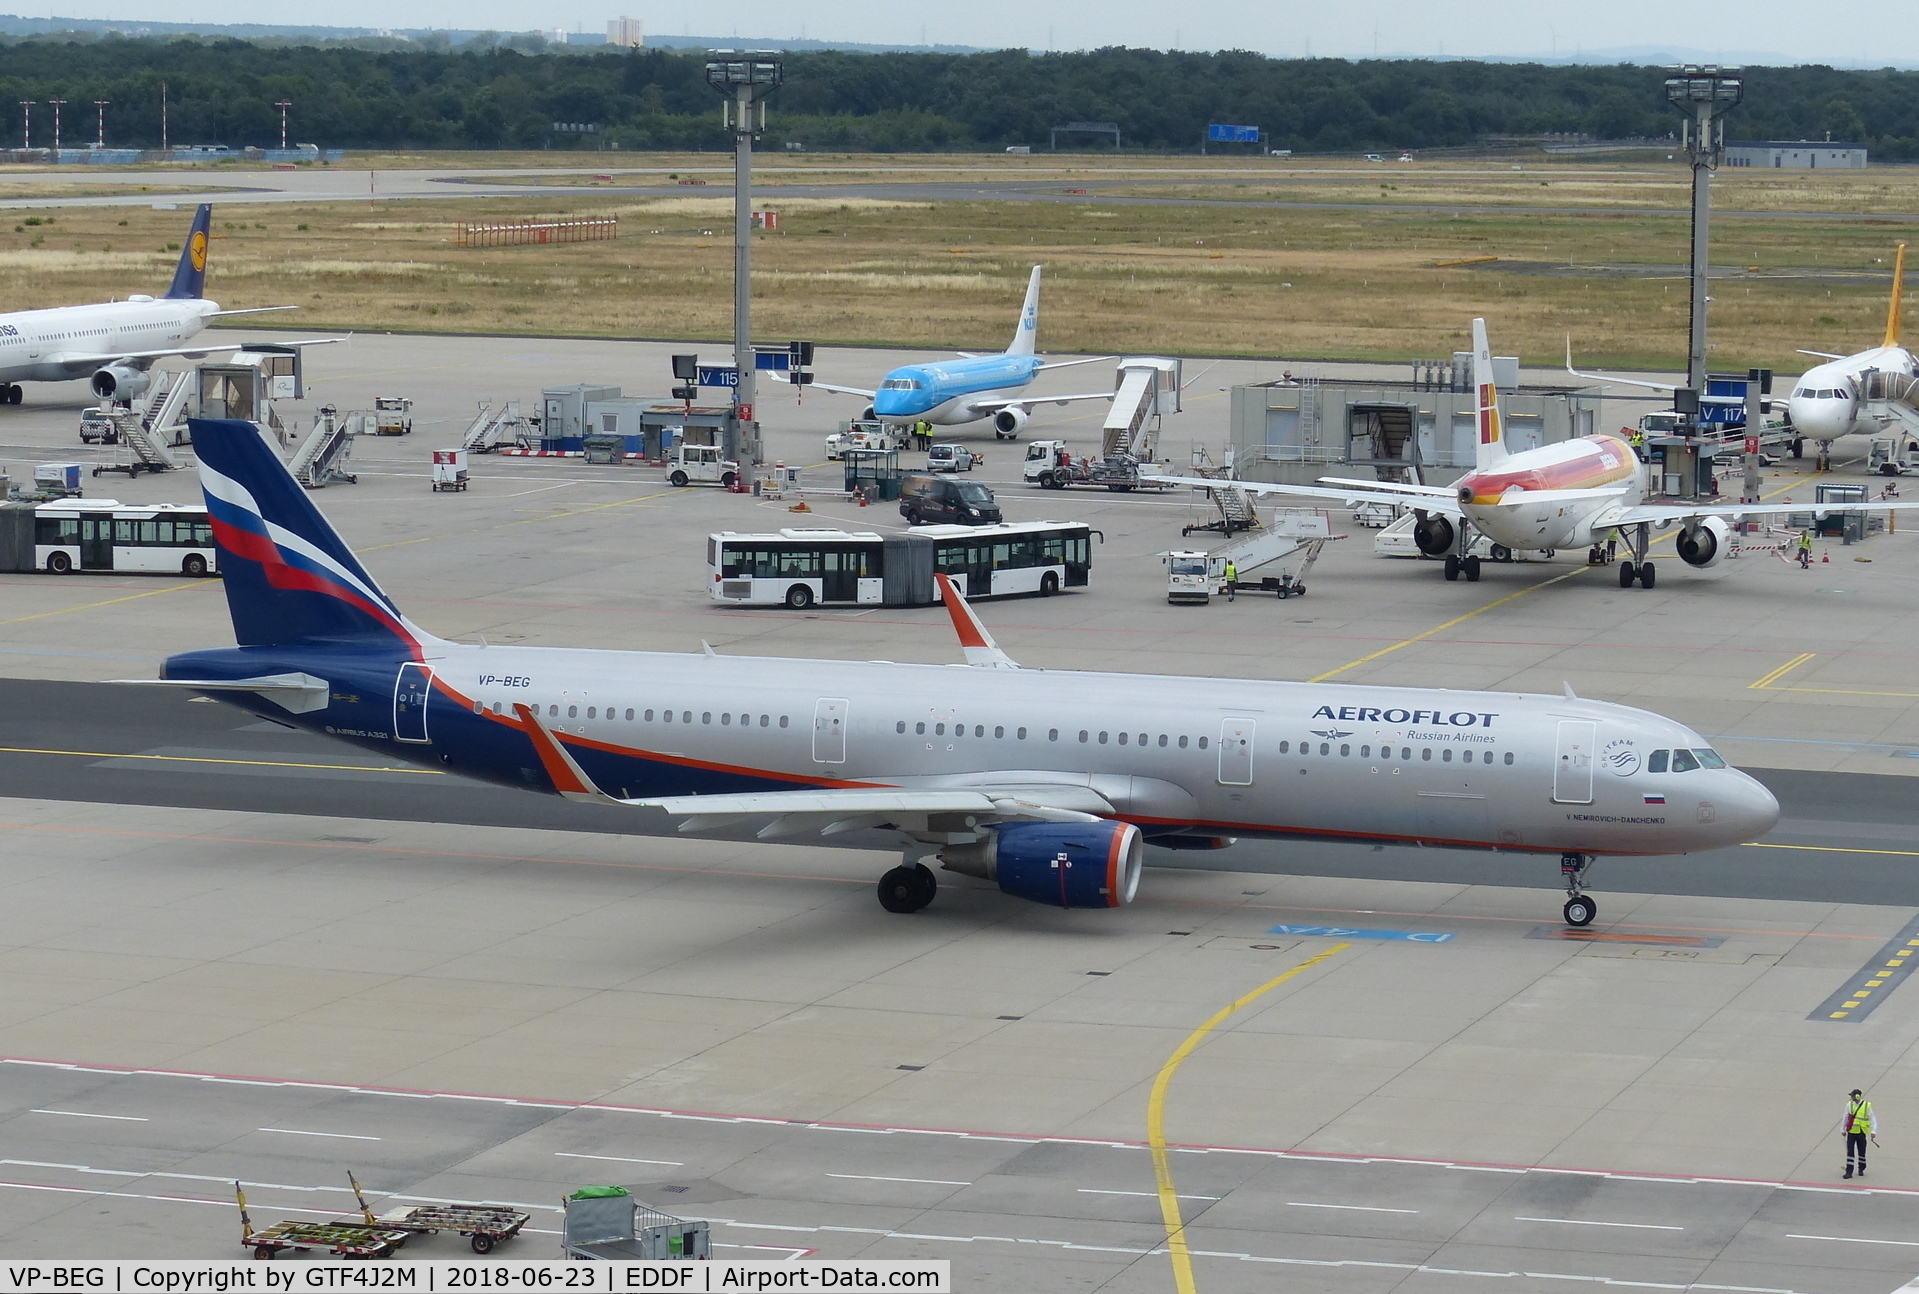 VP-BEG, 2015 Airbus A321-211 C/N 6756, VP-BEG  at Frankfurt 23.6.18